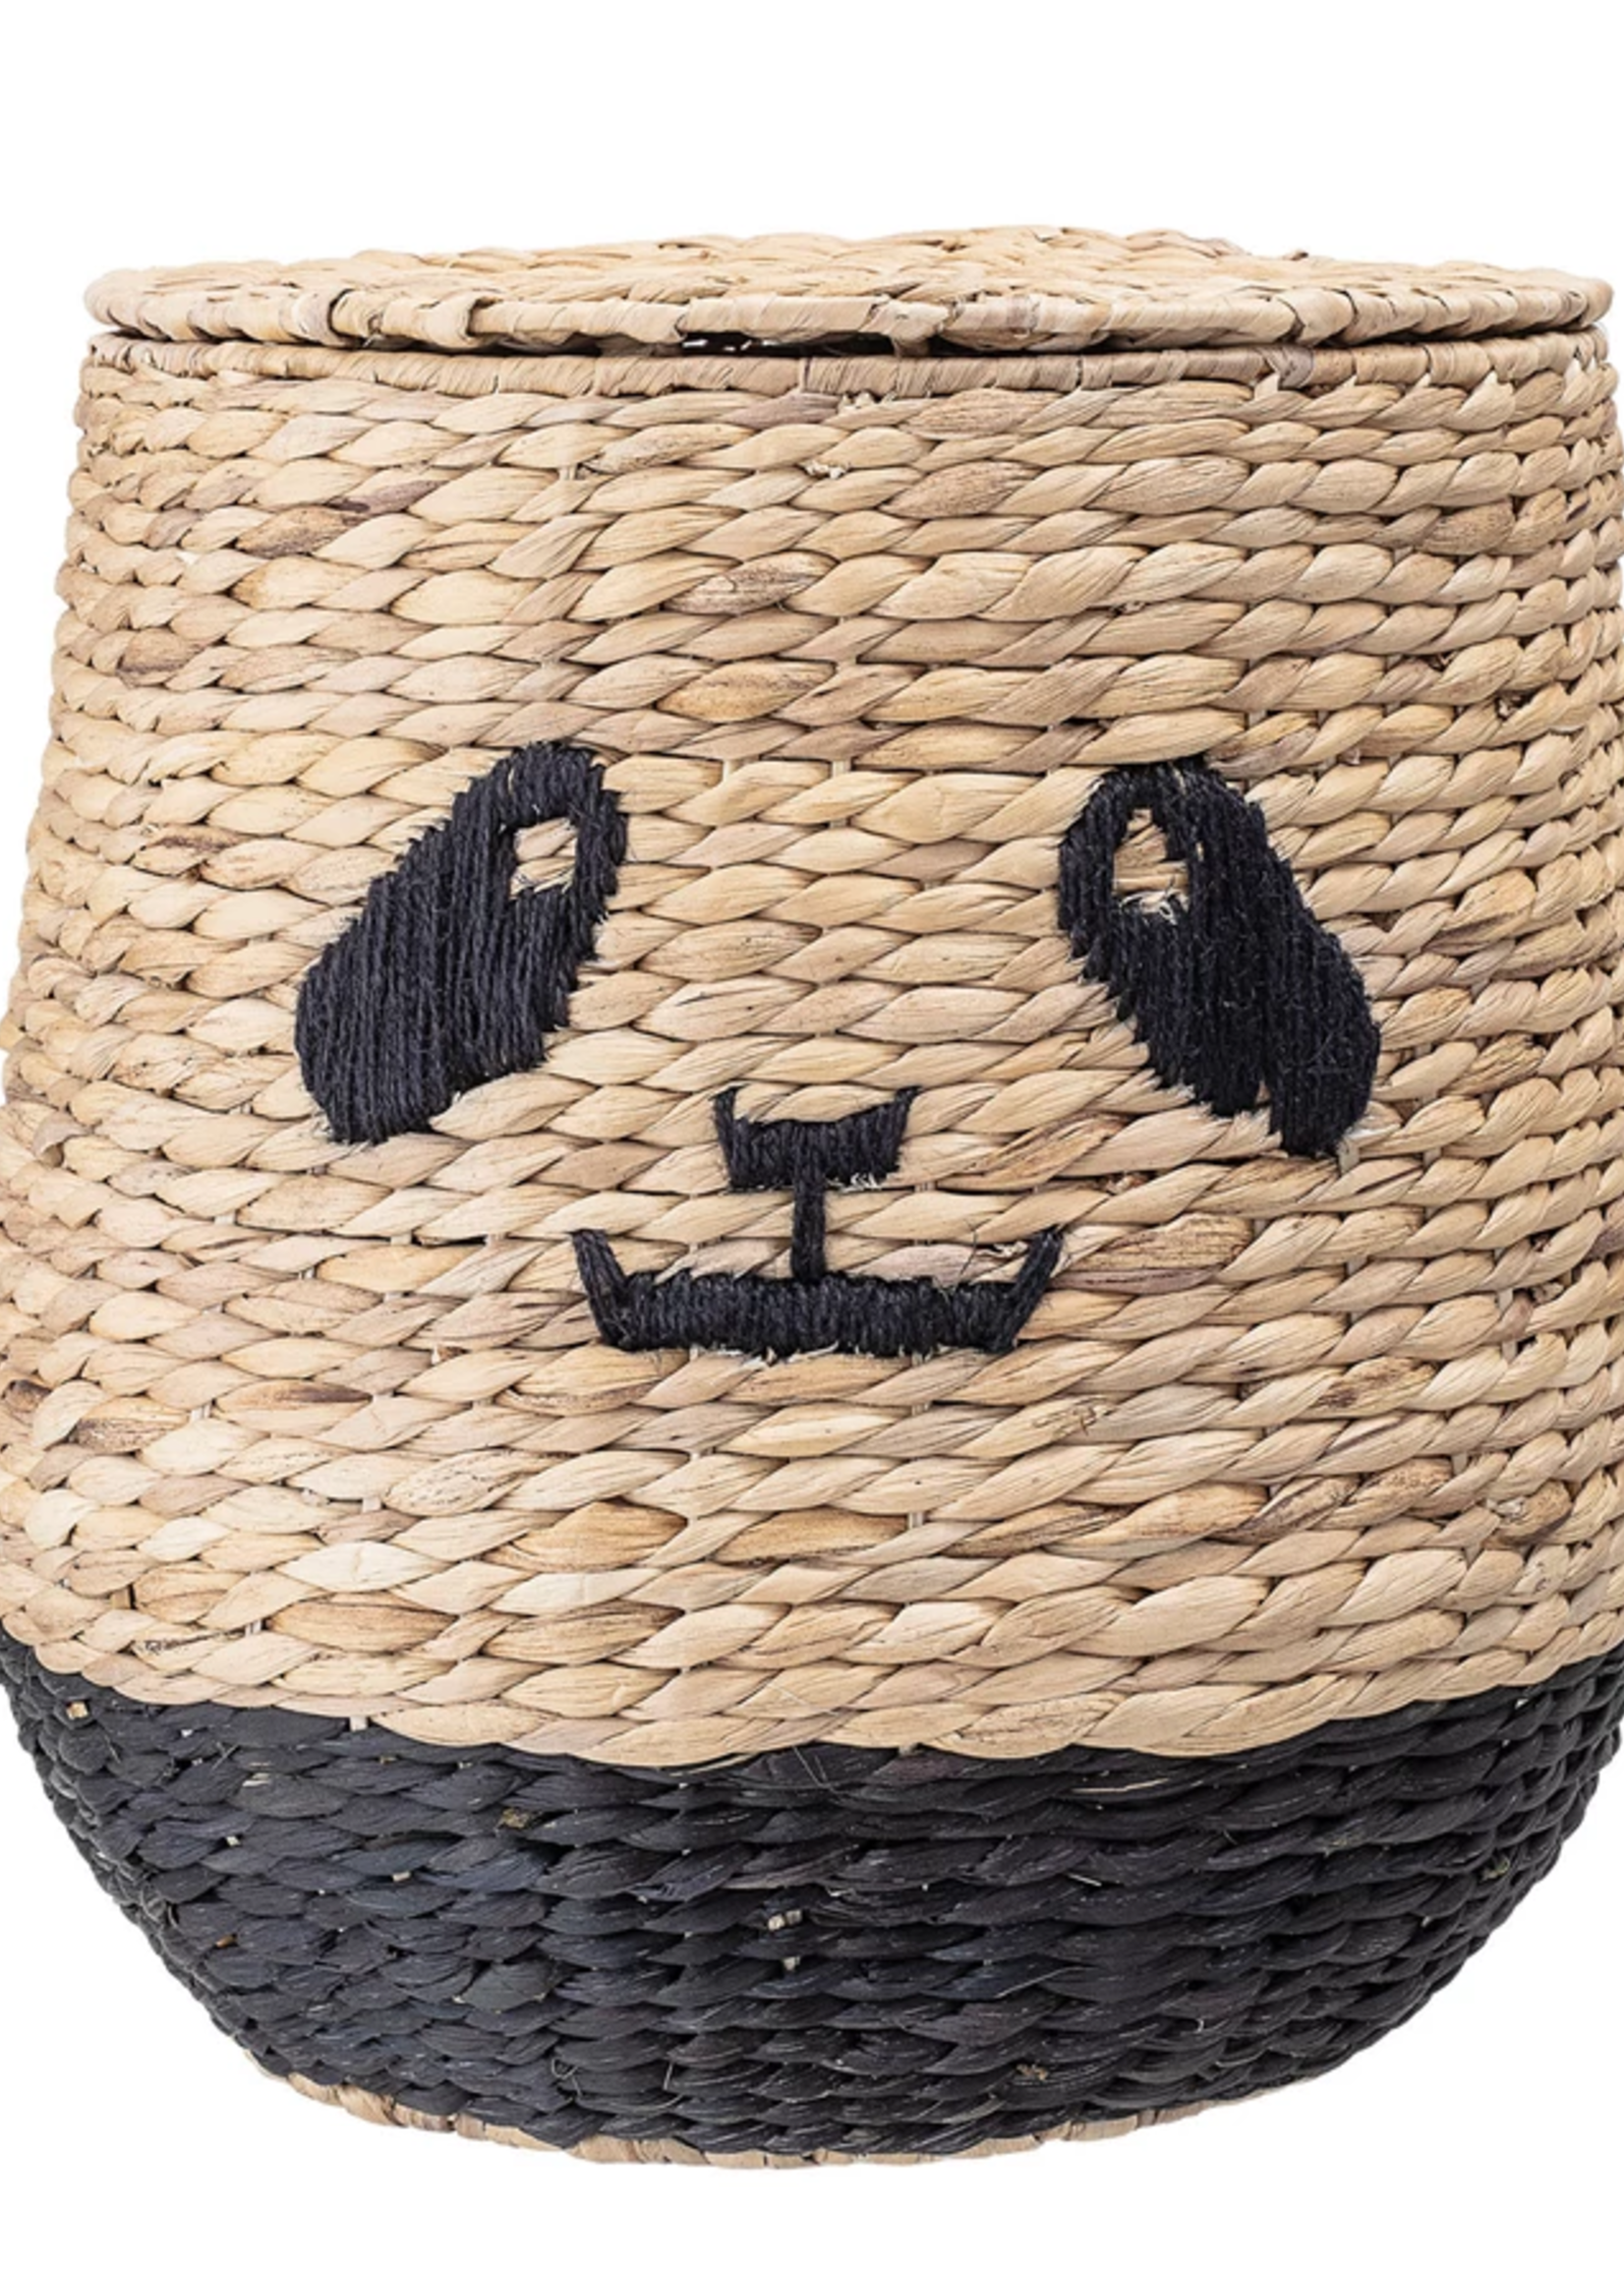 Bloomingville Rattan Basket with Lid and Panda Face Natural